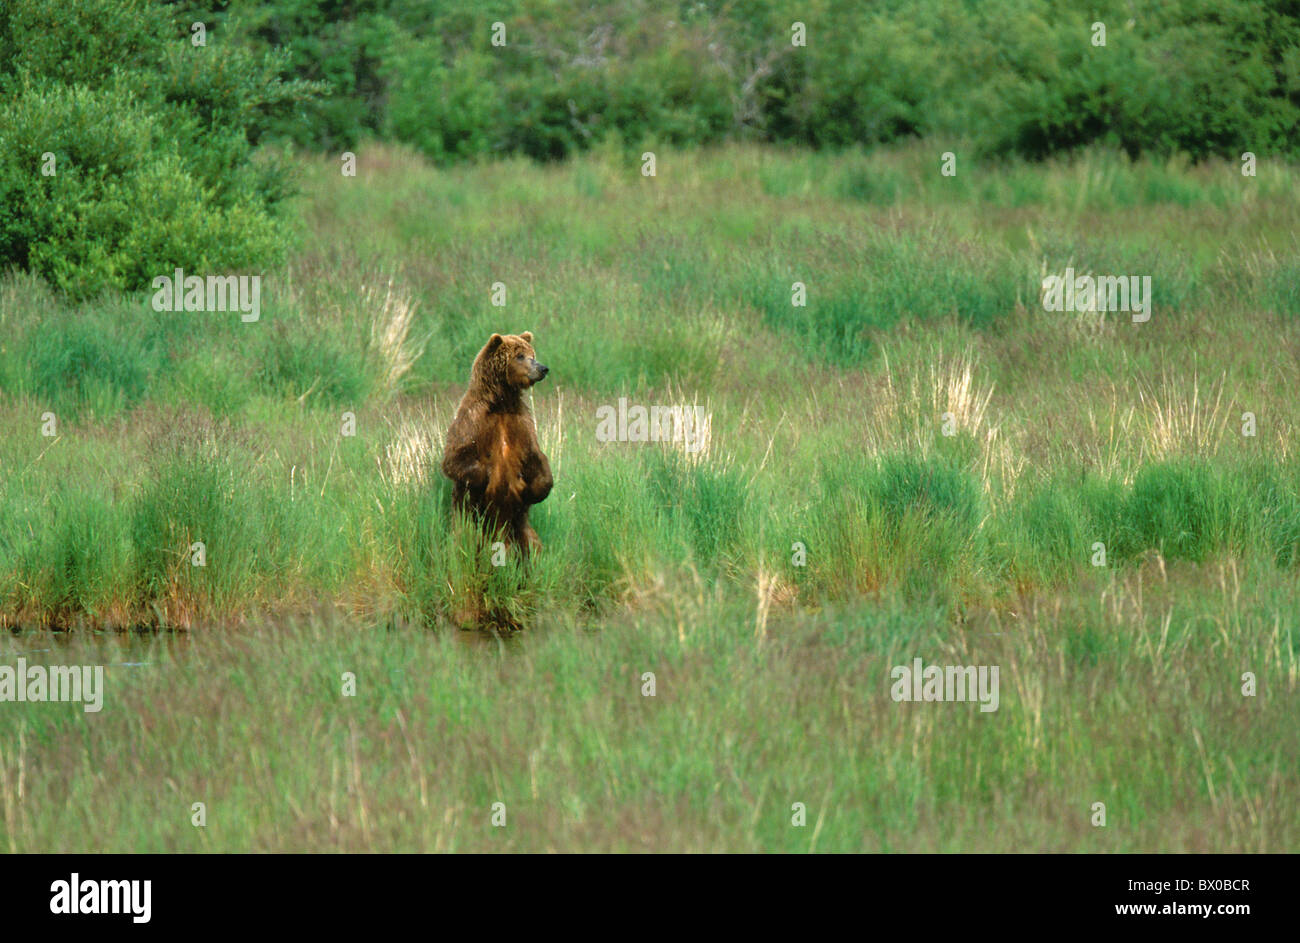 Alaska upright bear brown bear brown bear Brooks camp Coastal Coastal one grass high cheers portrait for Stock Photo